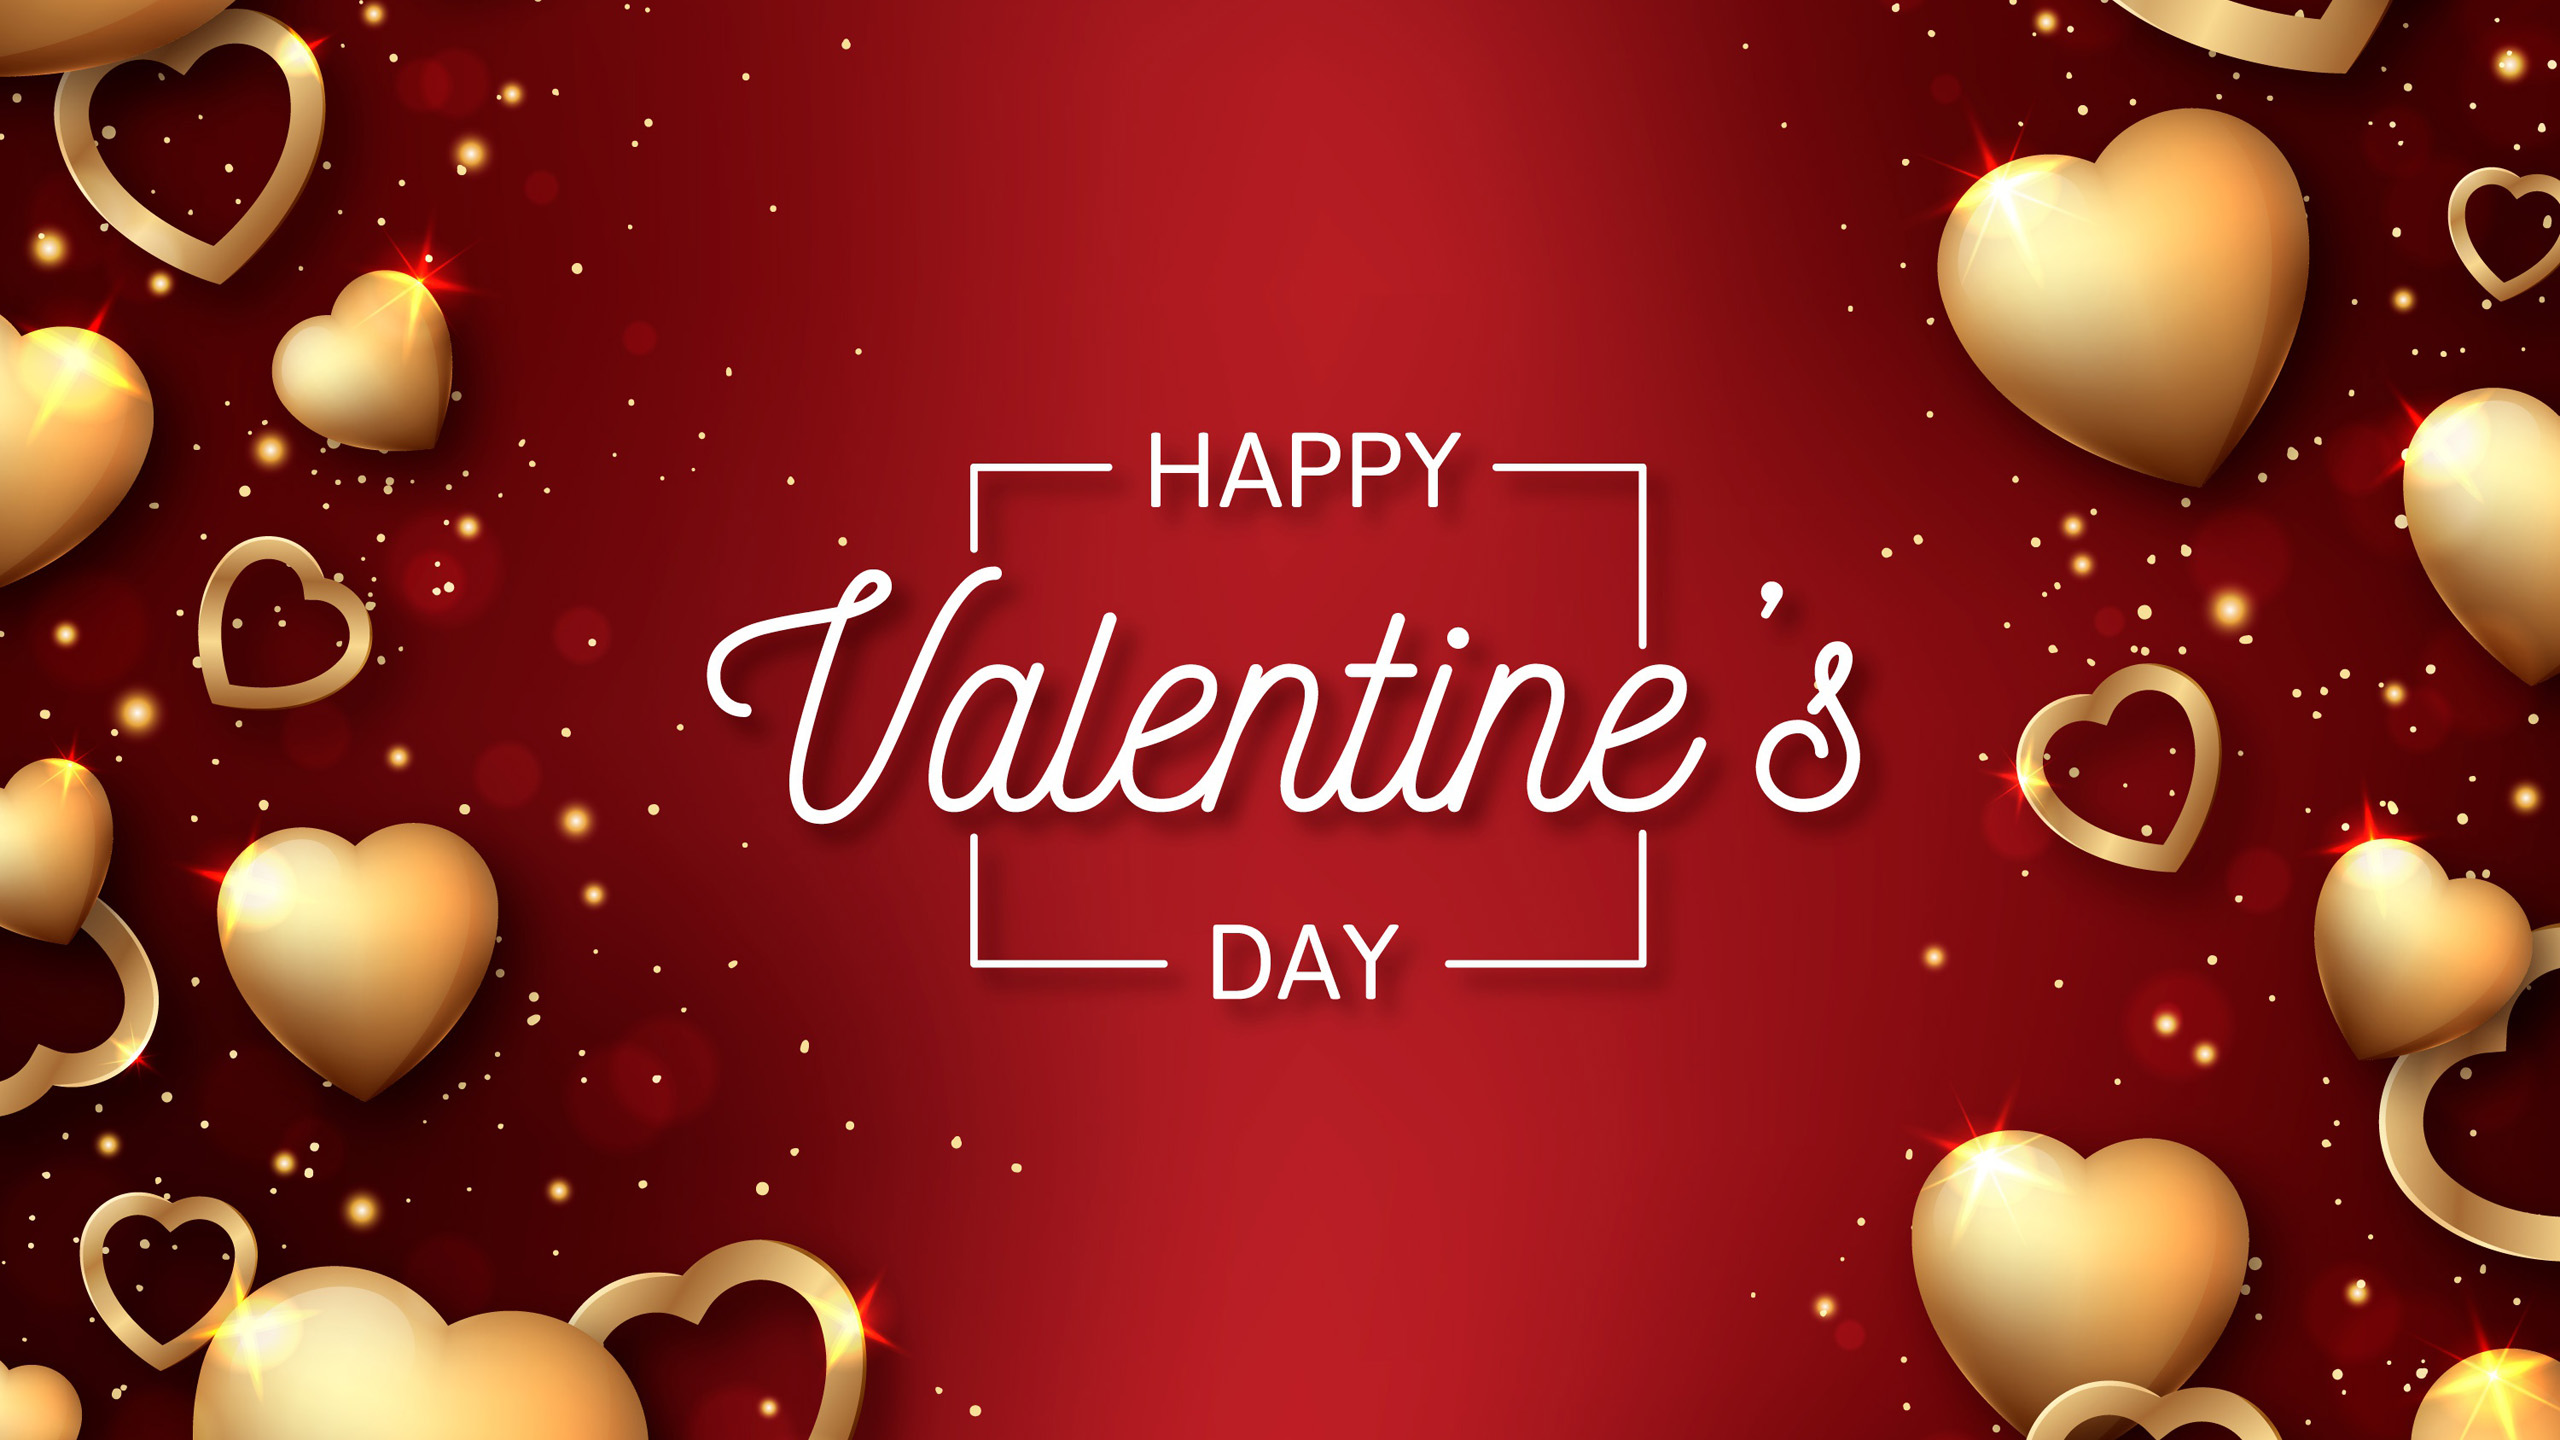 Golden Glitter Hearts Glare Happy Valentine’s Day Red Wallpaper 2K Valentine’s Day